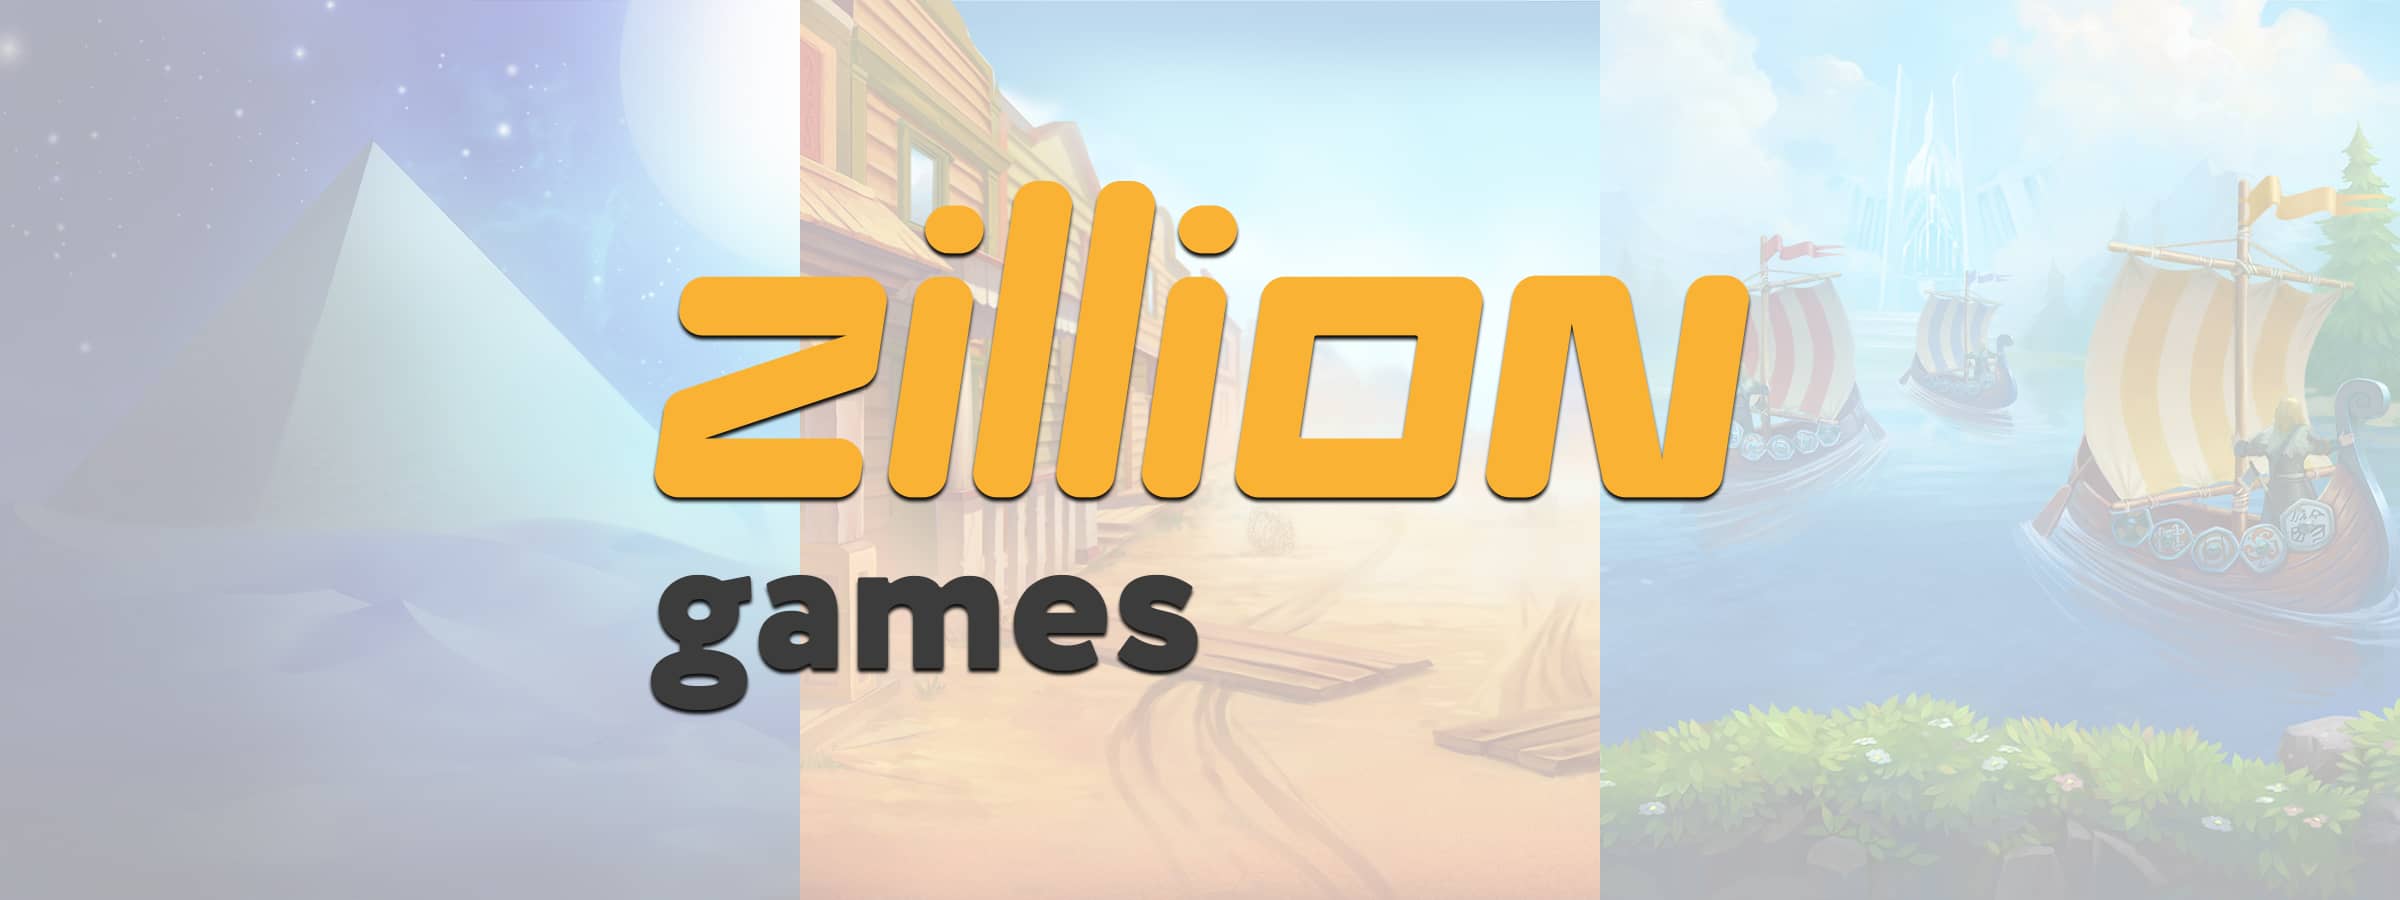 zillion games provider